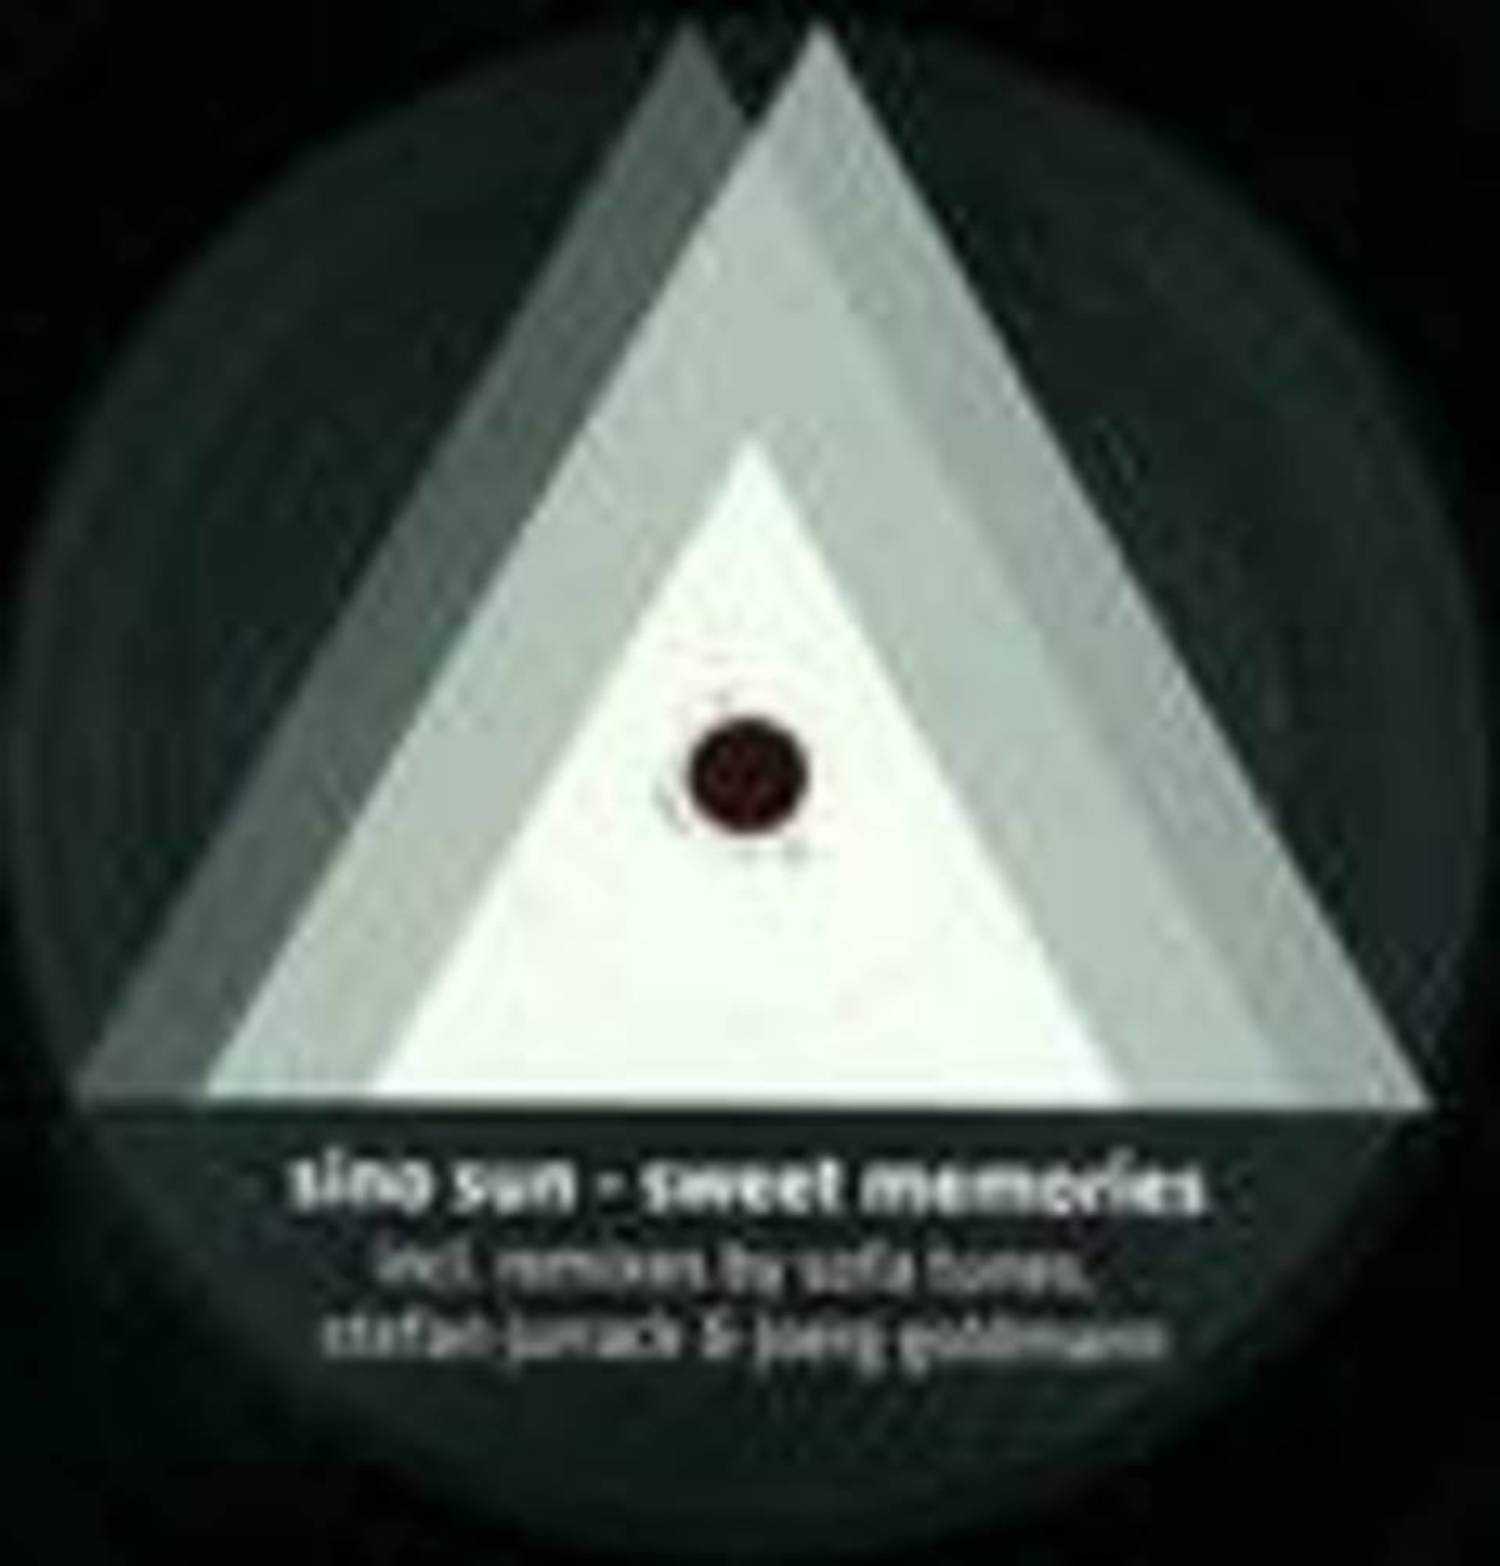 Sino Sun - SWEET MEMORIES